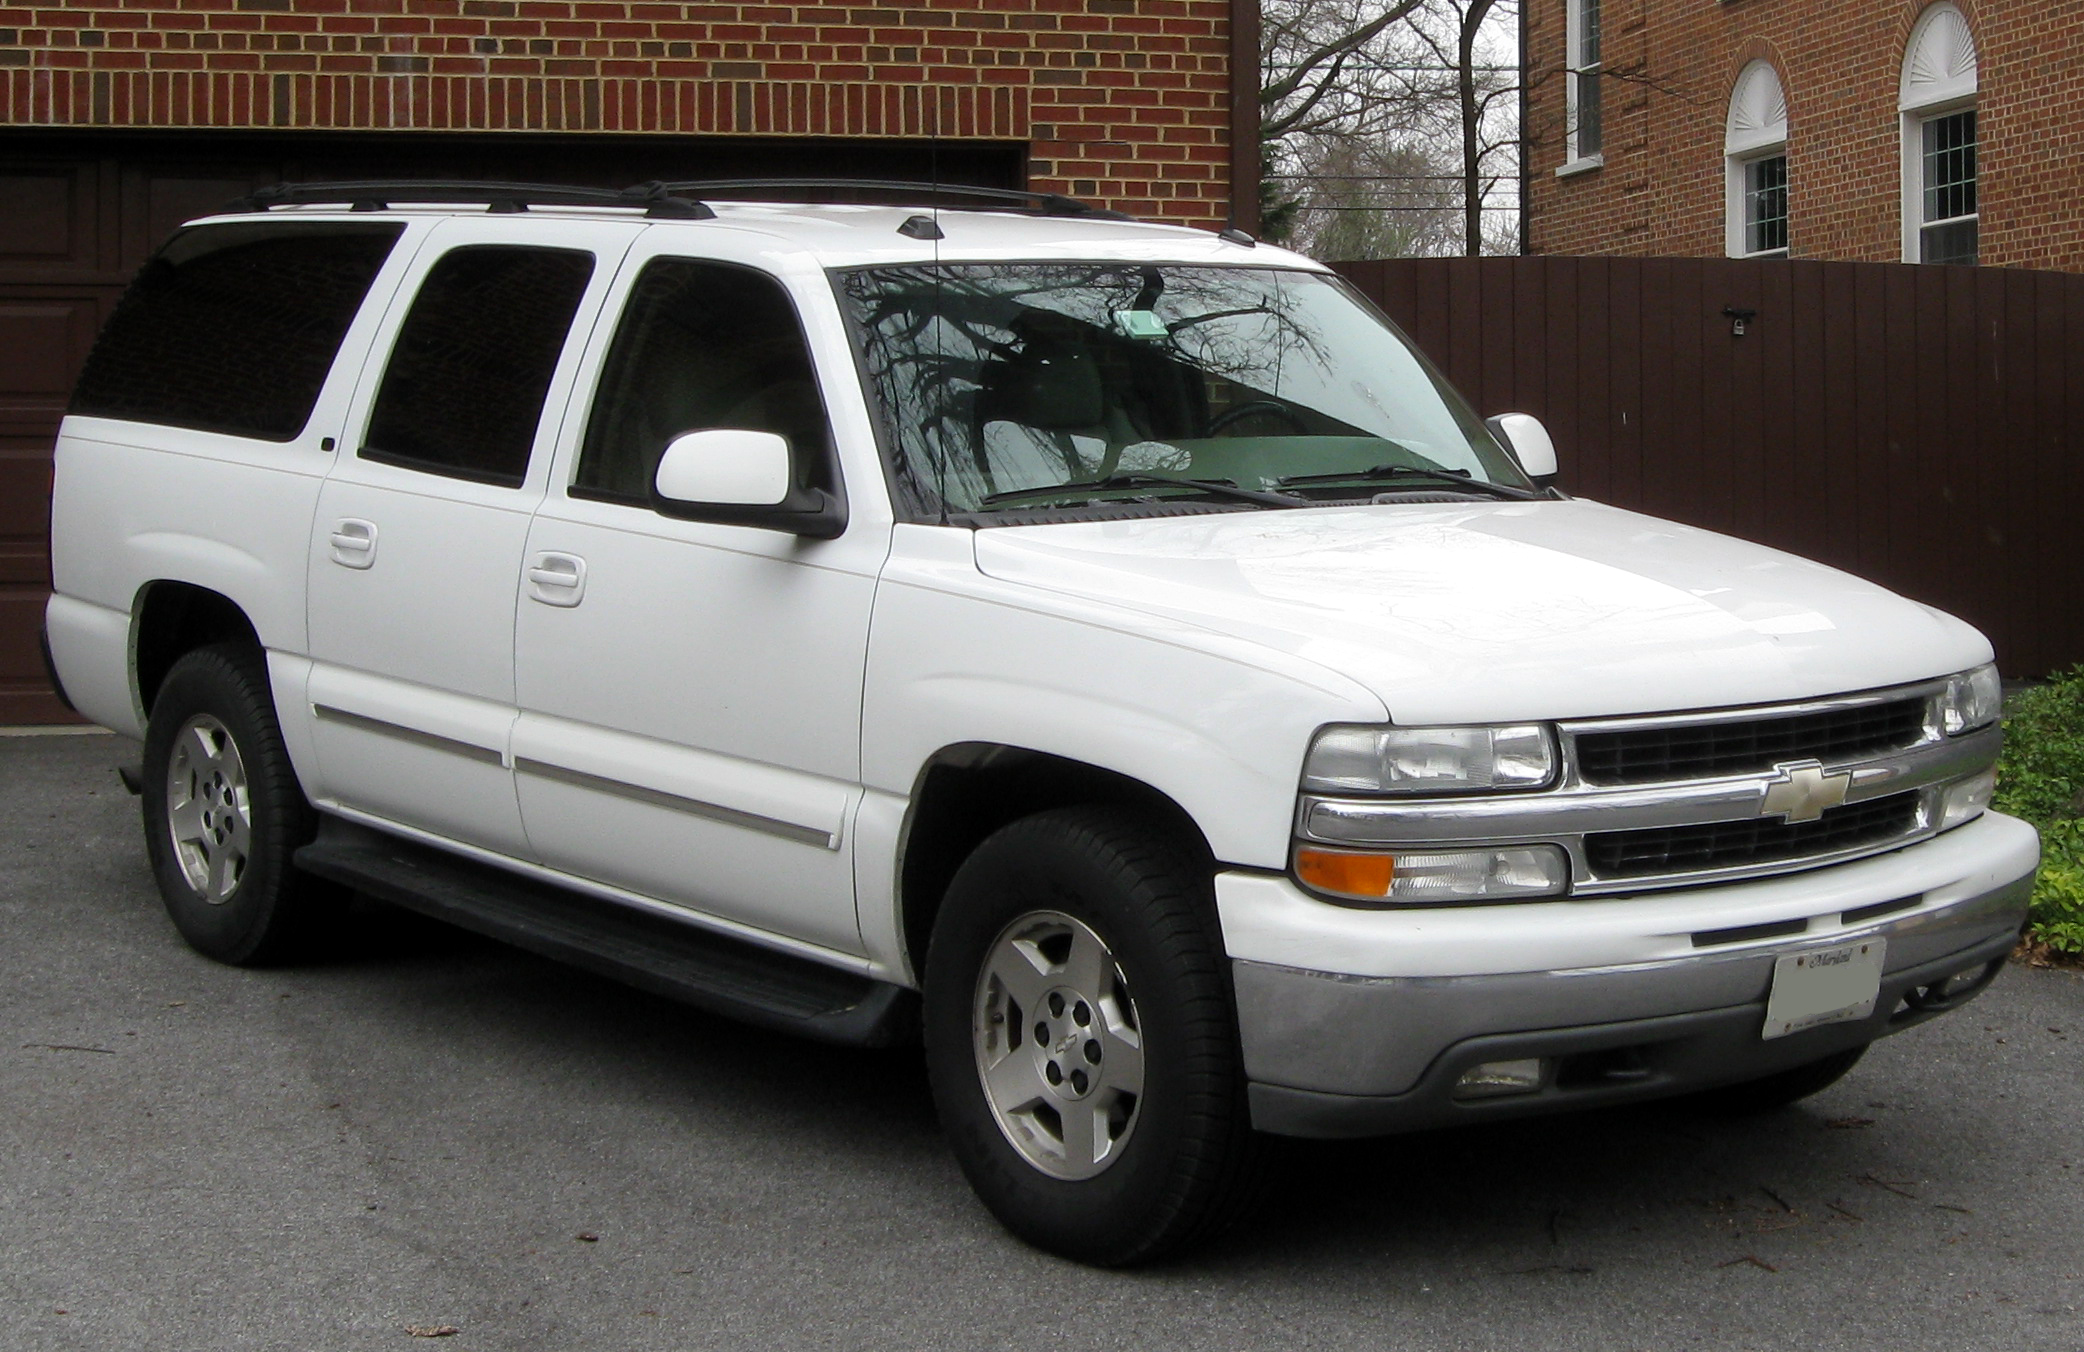 File:2000-2006 Chevrolet Suburban -- 03-16-2012 2.JPG - Wikimedia Commons